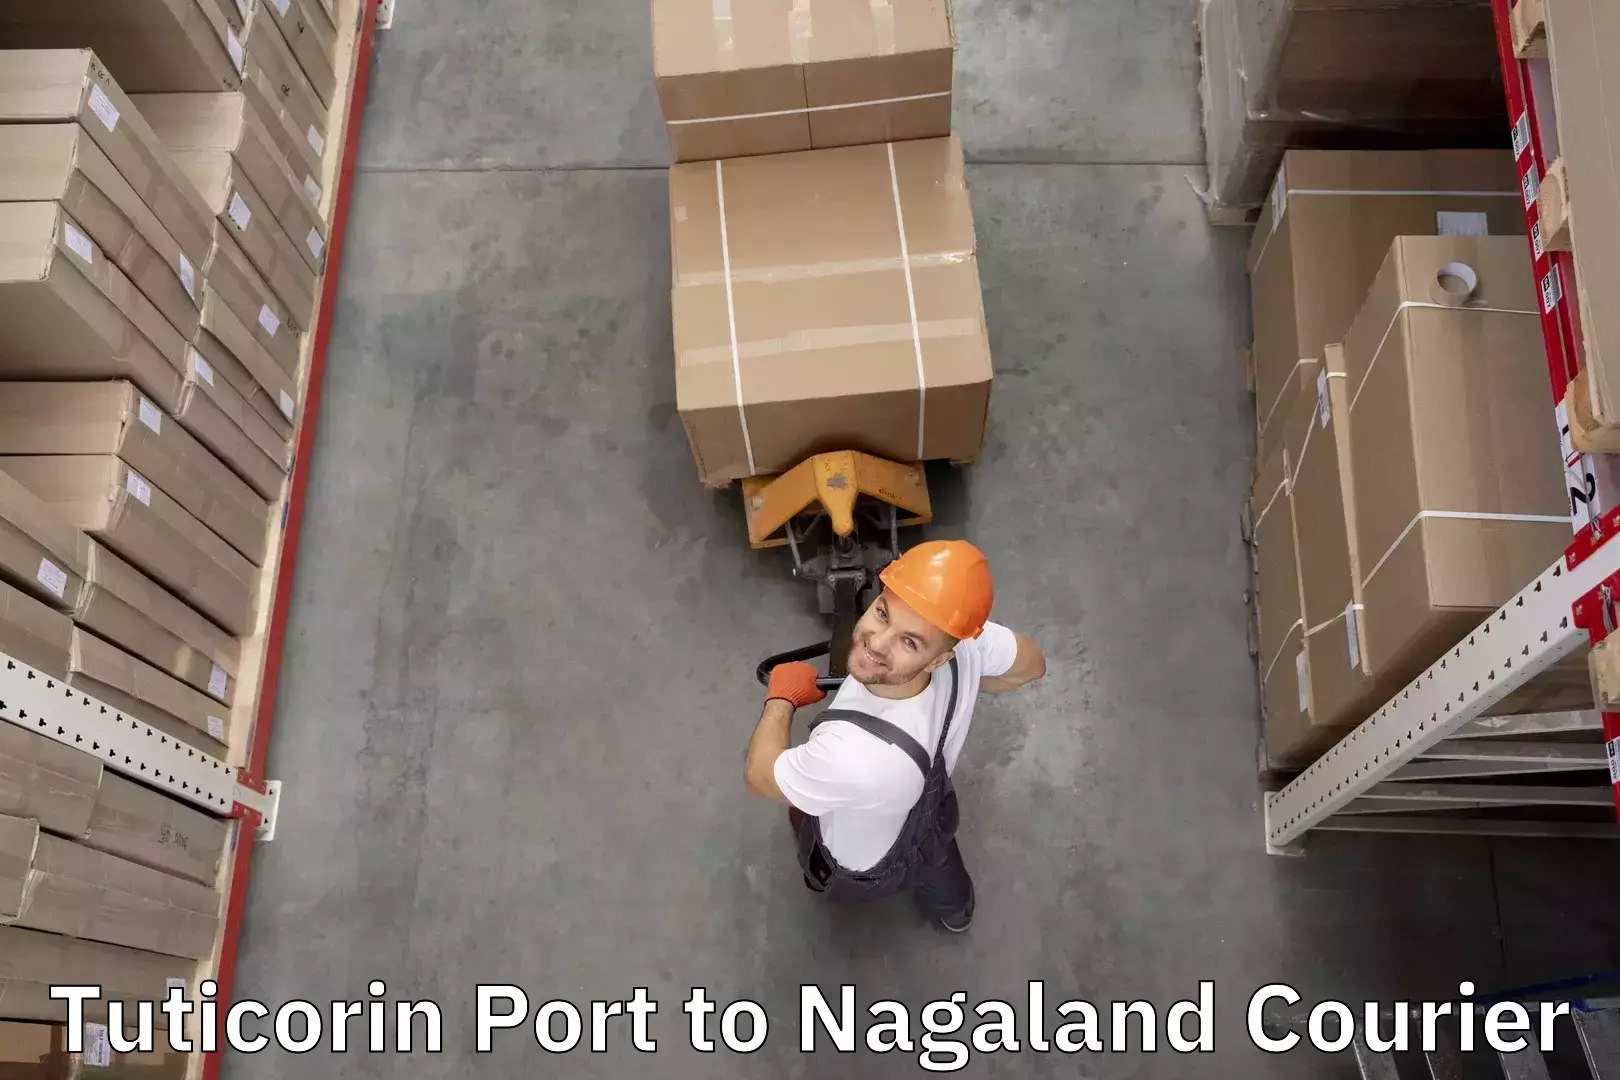 Baggage transport network Tuticorin Port to Nagaland